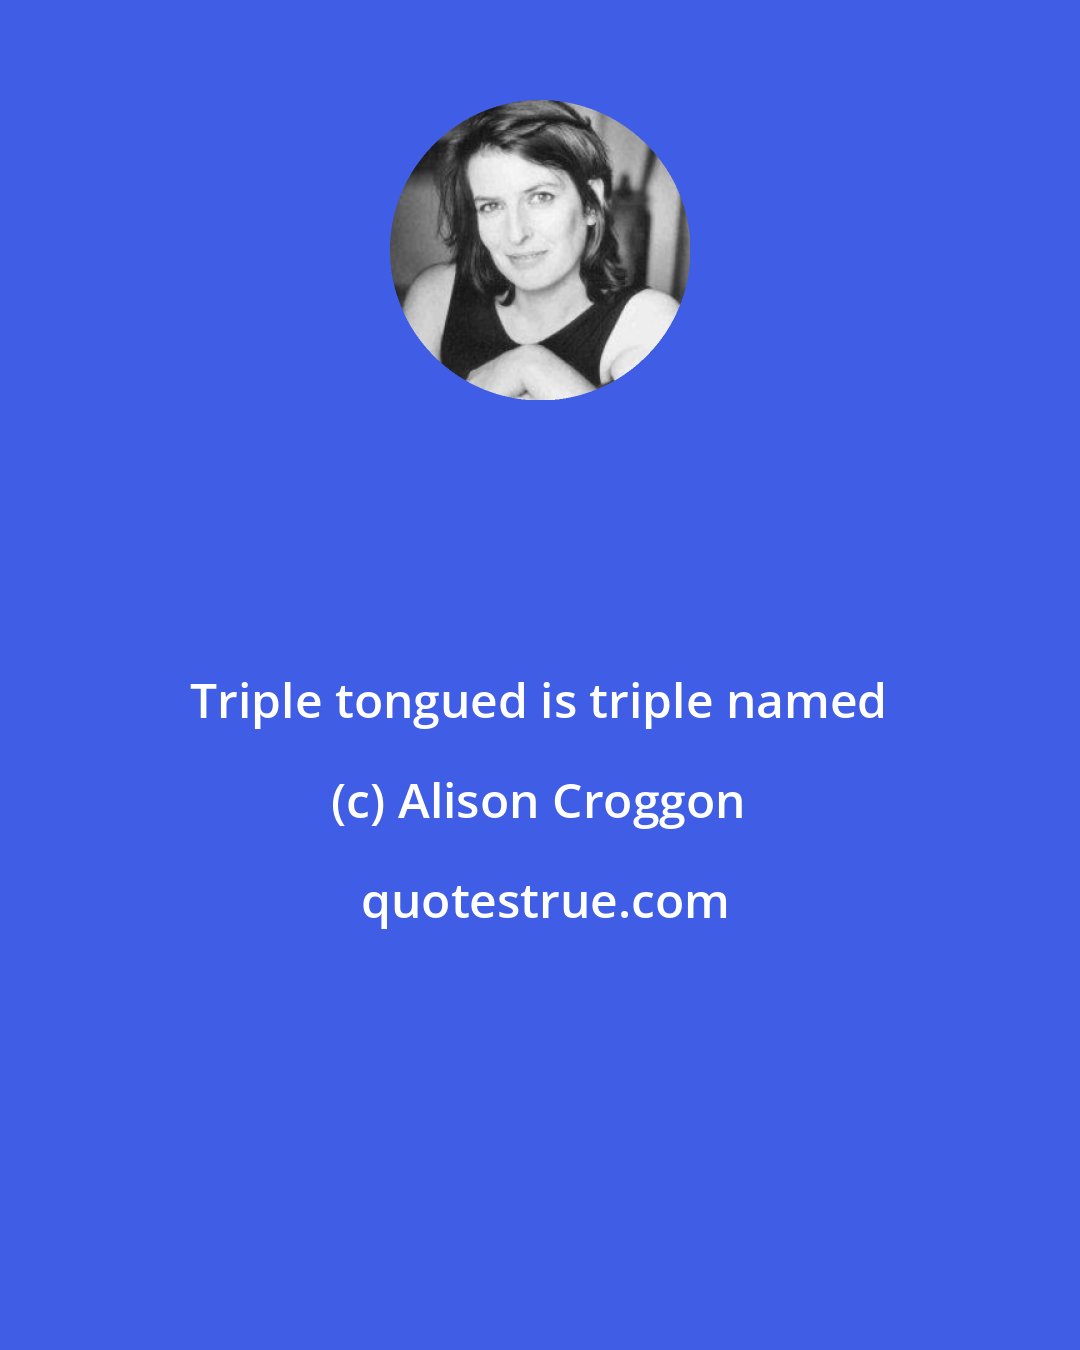 Alison Croggon: Triple tongued is triple named